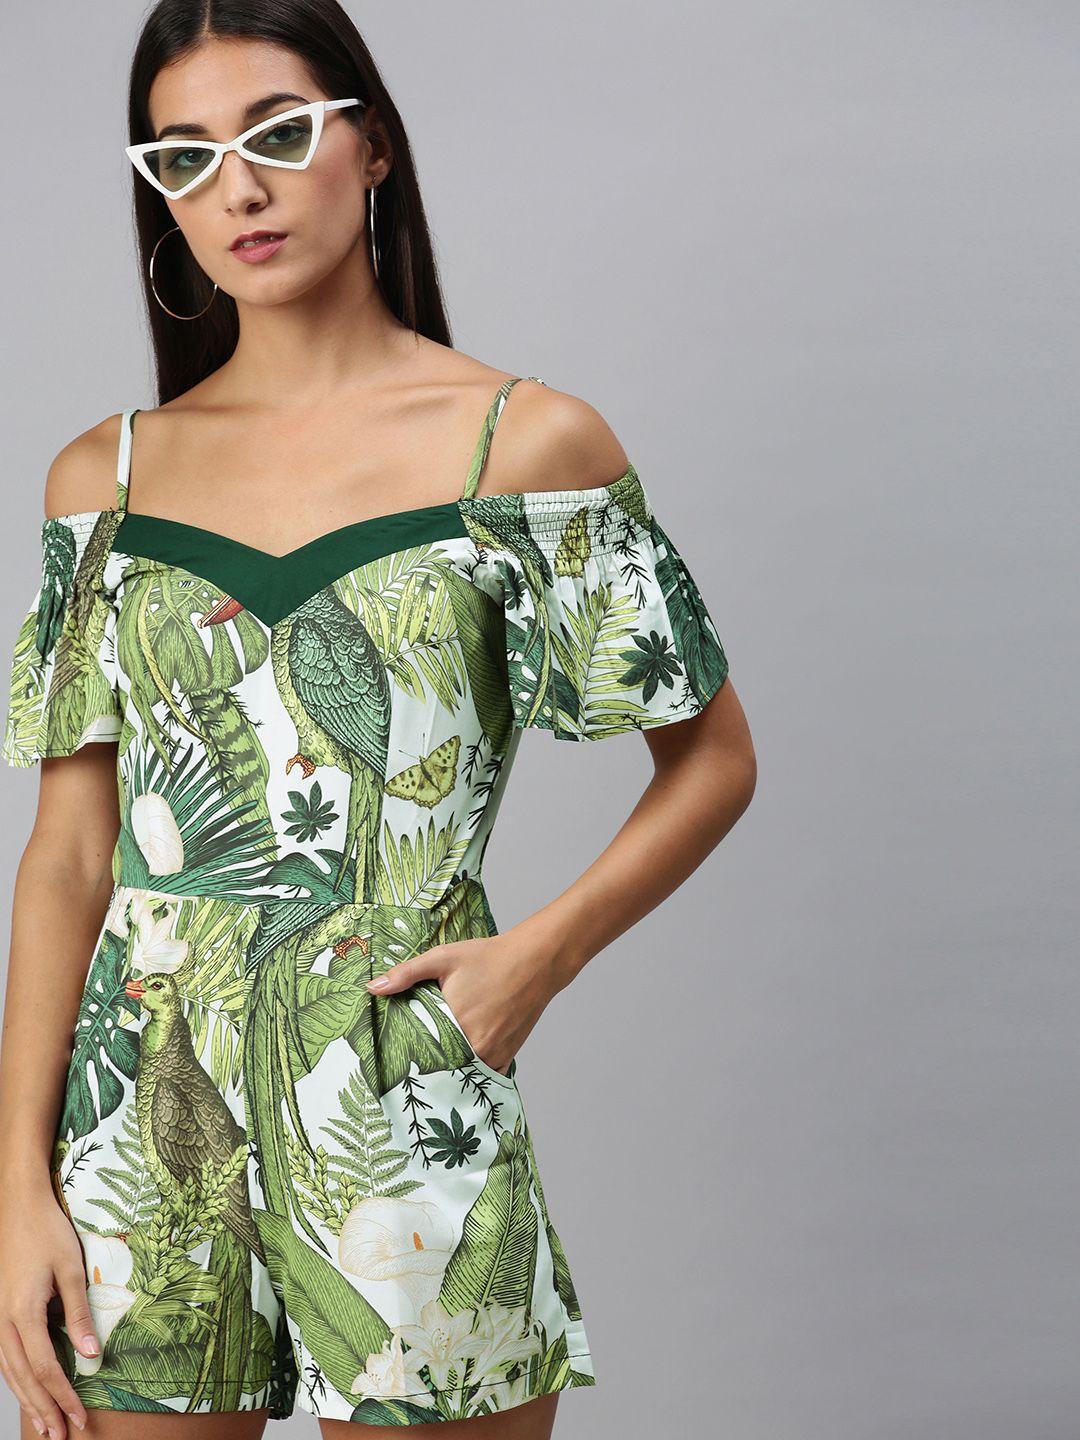 kassually women olive green off-shoulder tropical printed jumpsuit